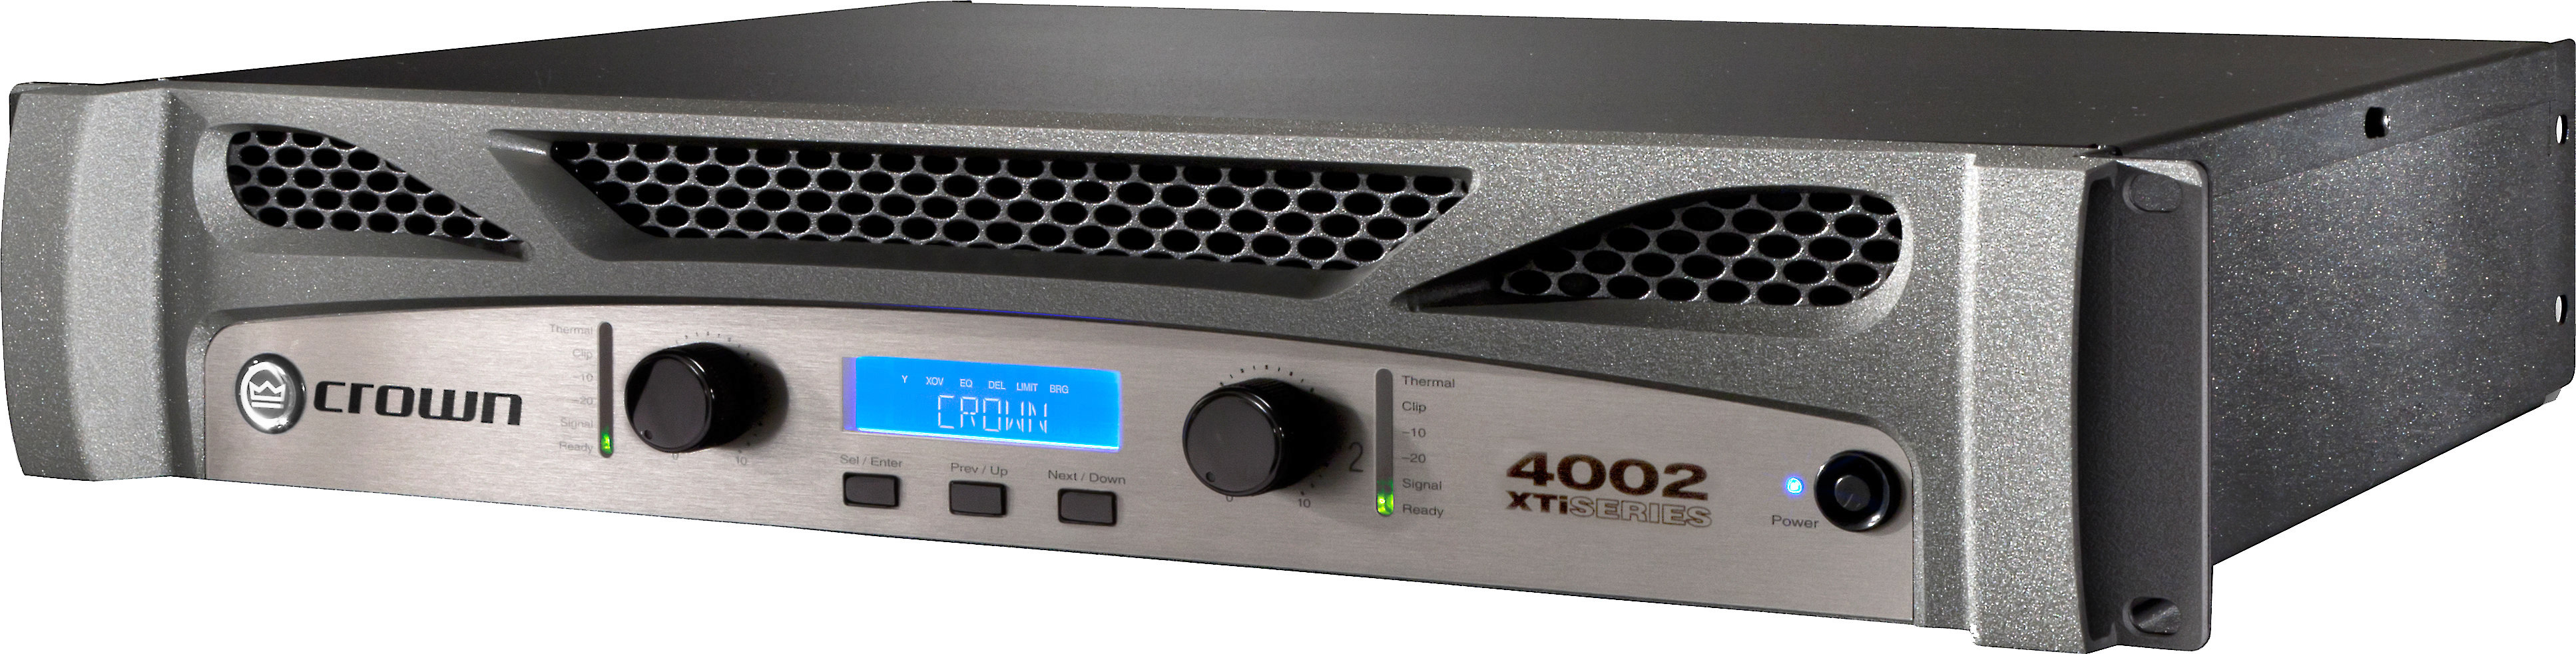 Crown XTI4002 | Amplifier: 1,200W x2 at 4 Ohms